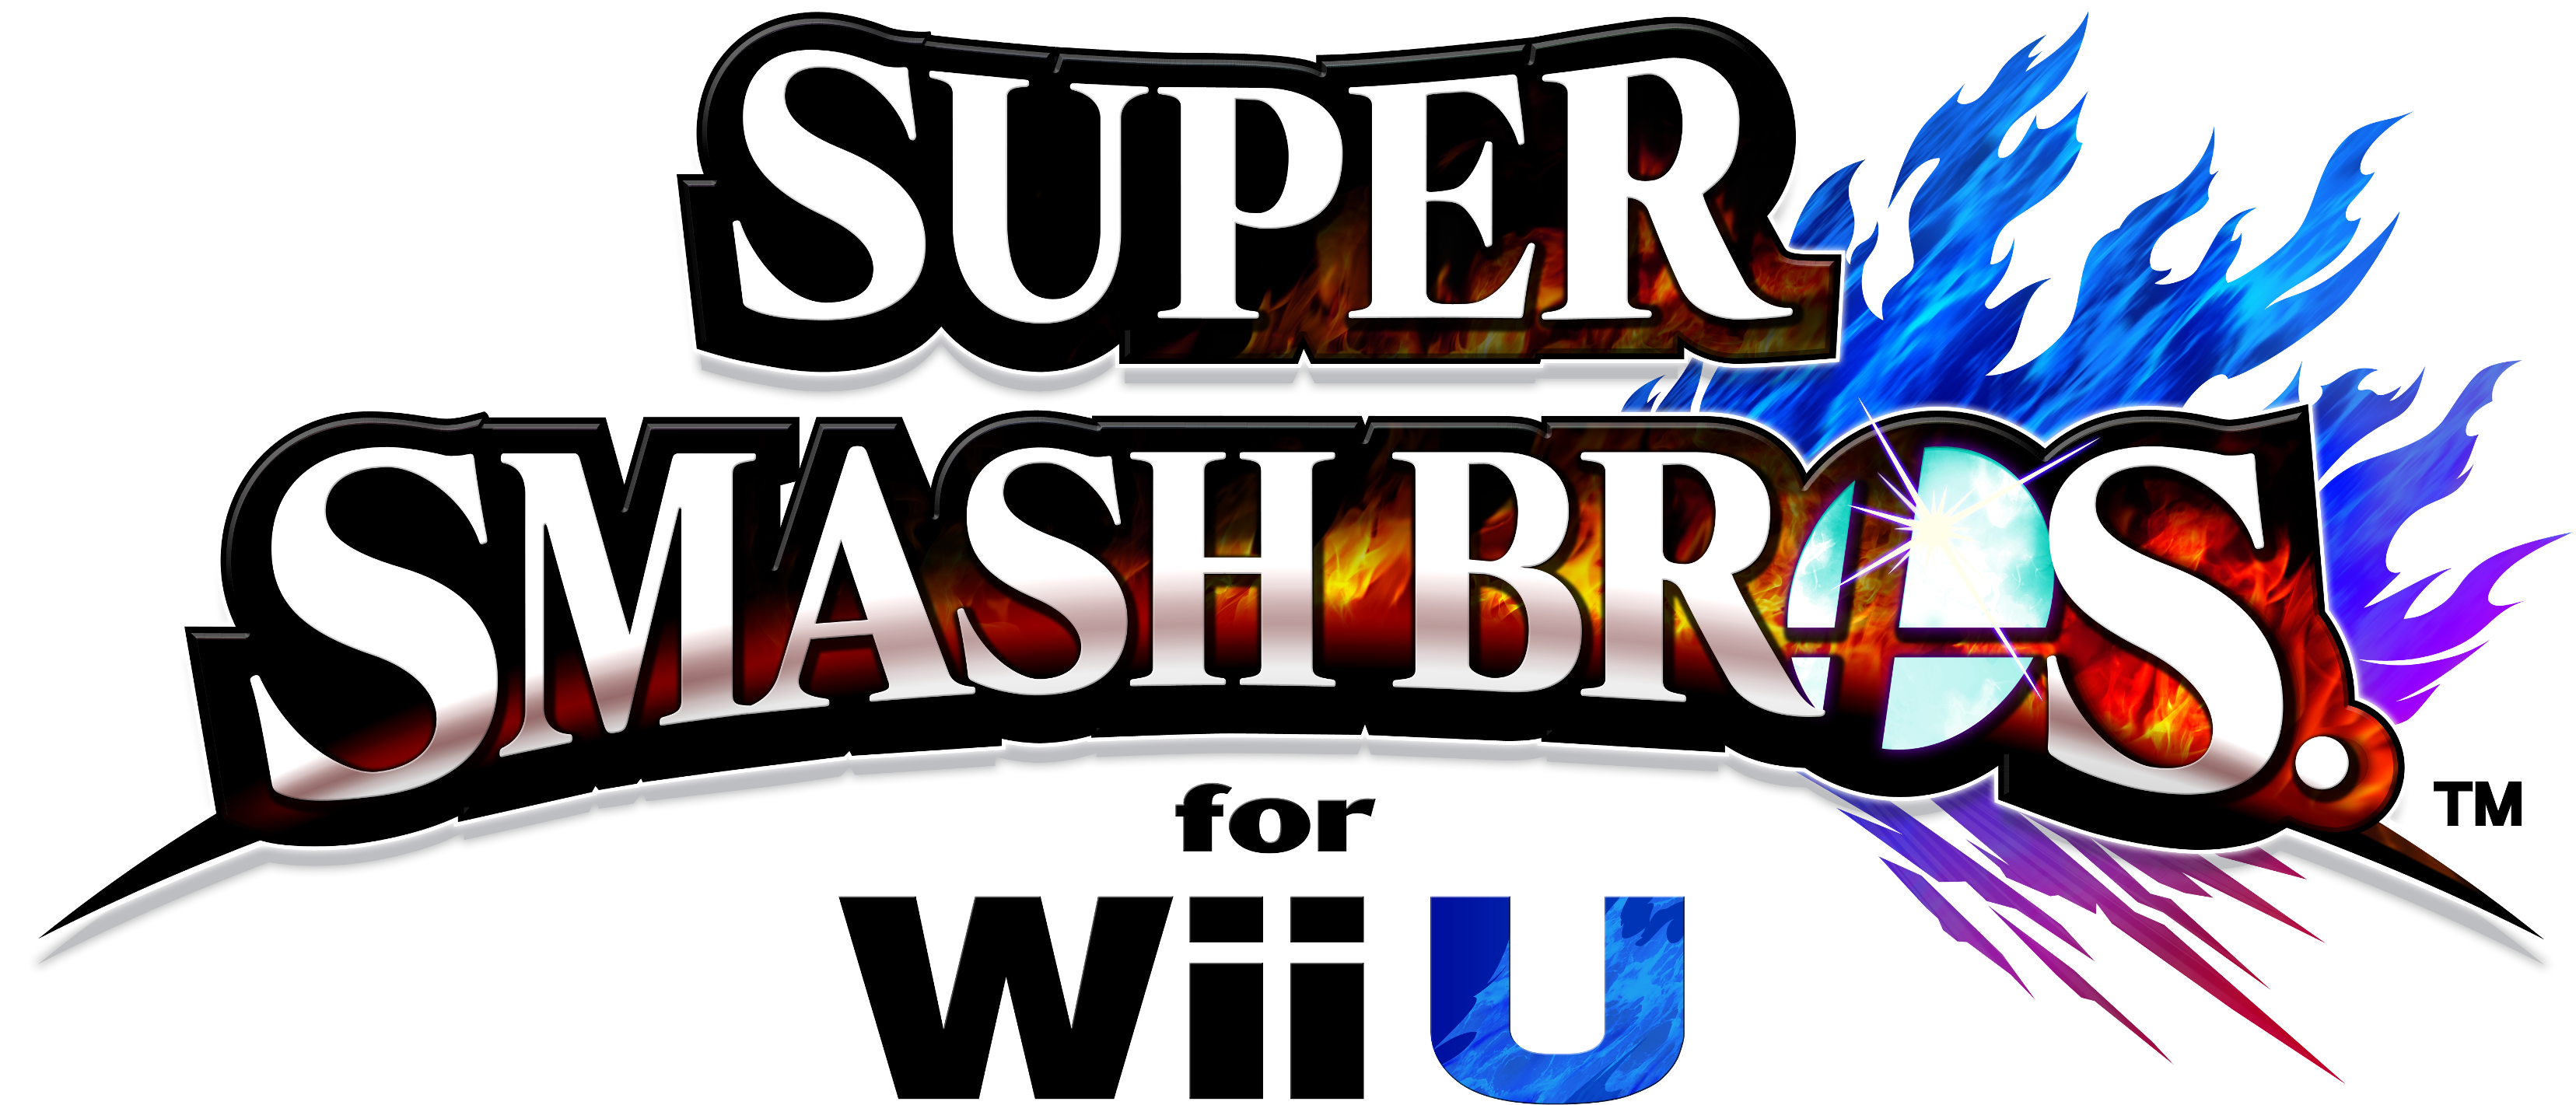 Super Smash Bros. Logo PNG Image gratuite